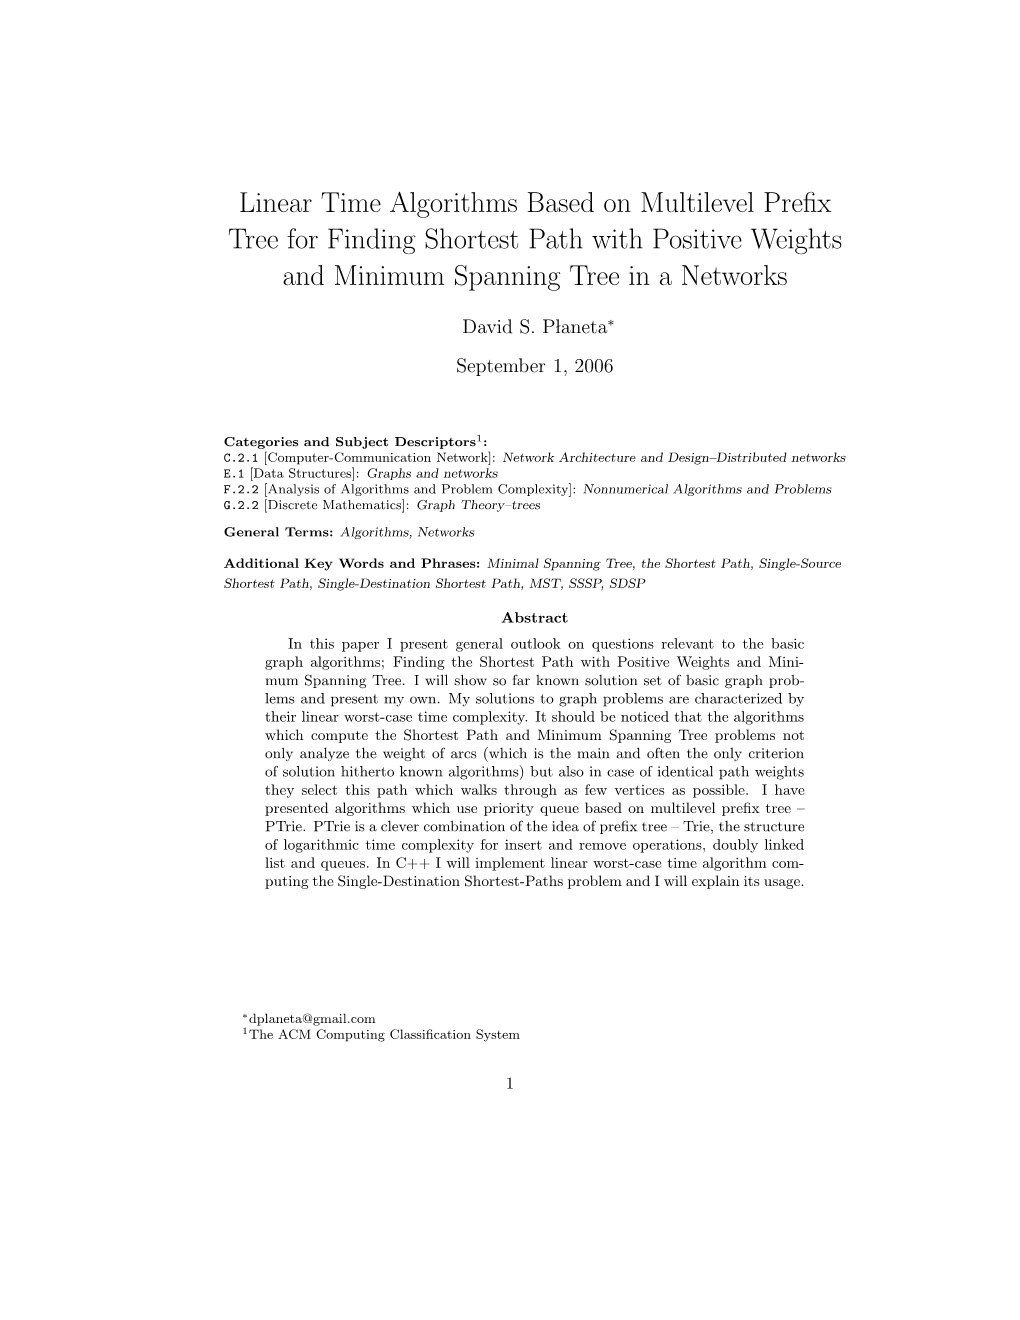 Linear Time Algorithms Based on Multilevel Prefix Tree for Finding